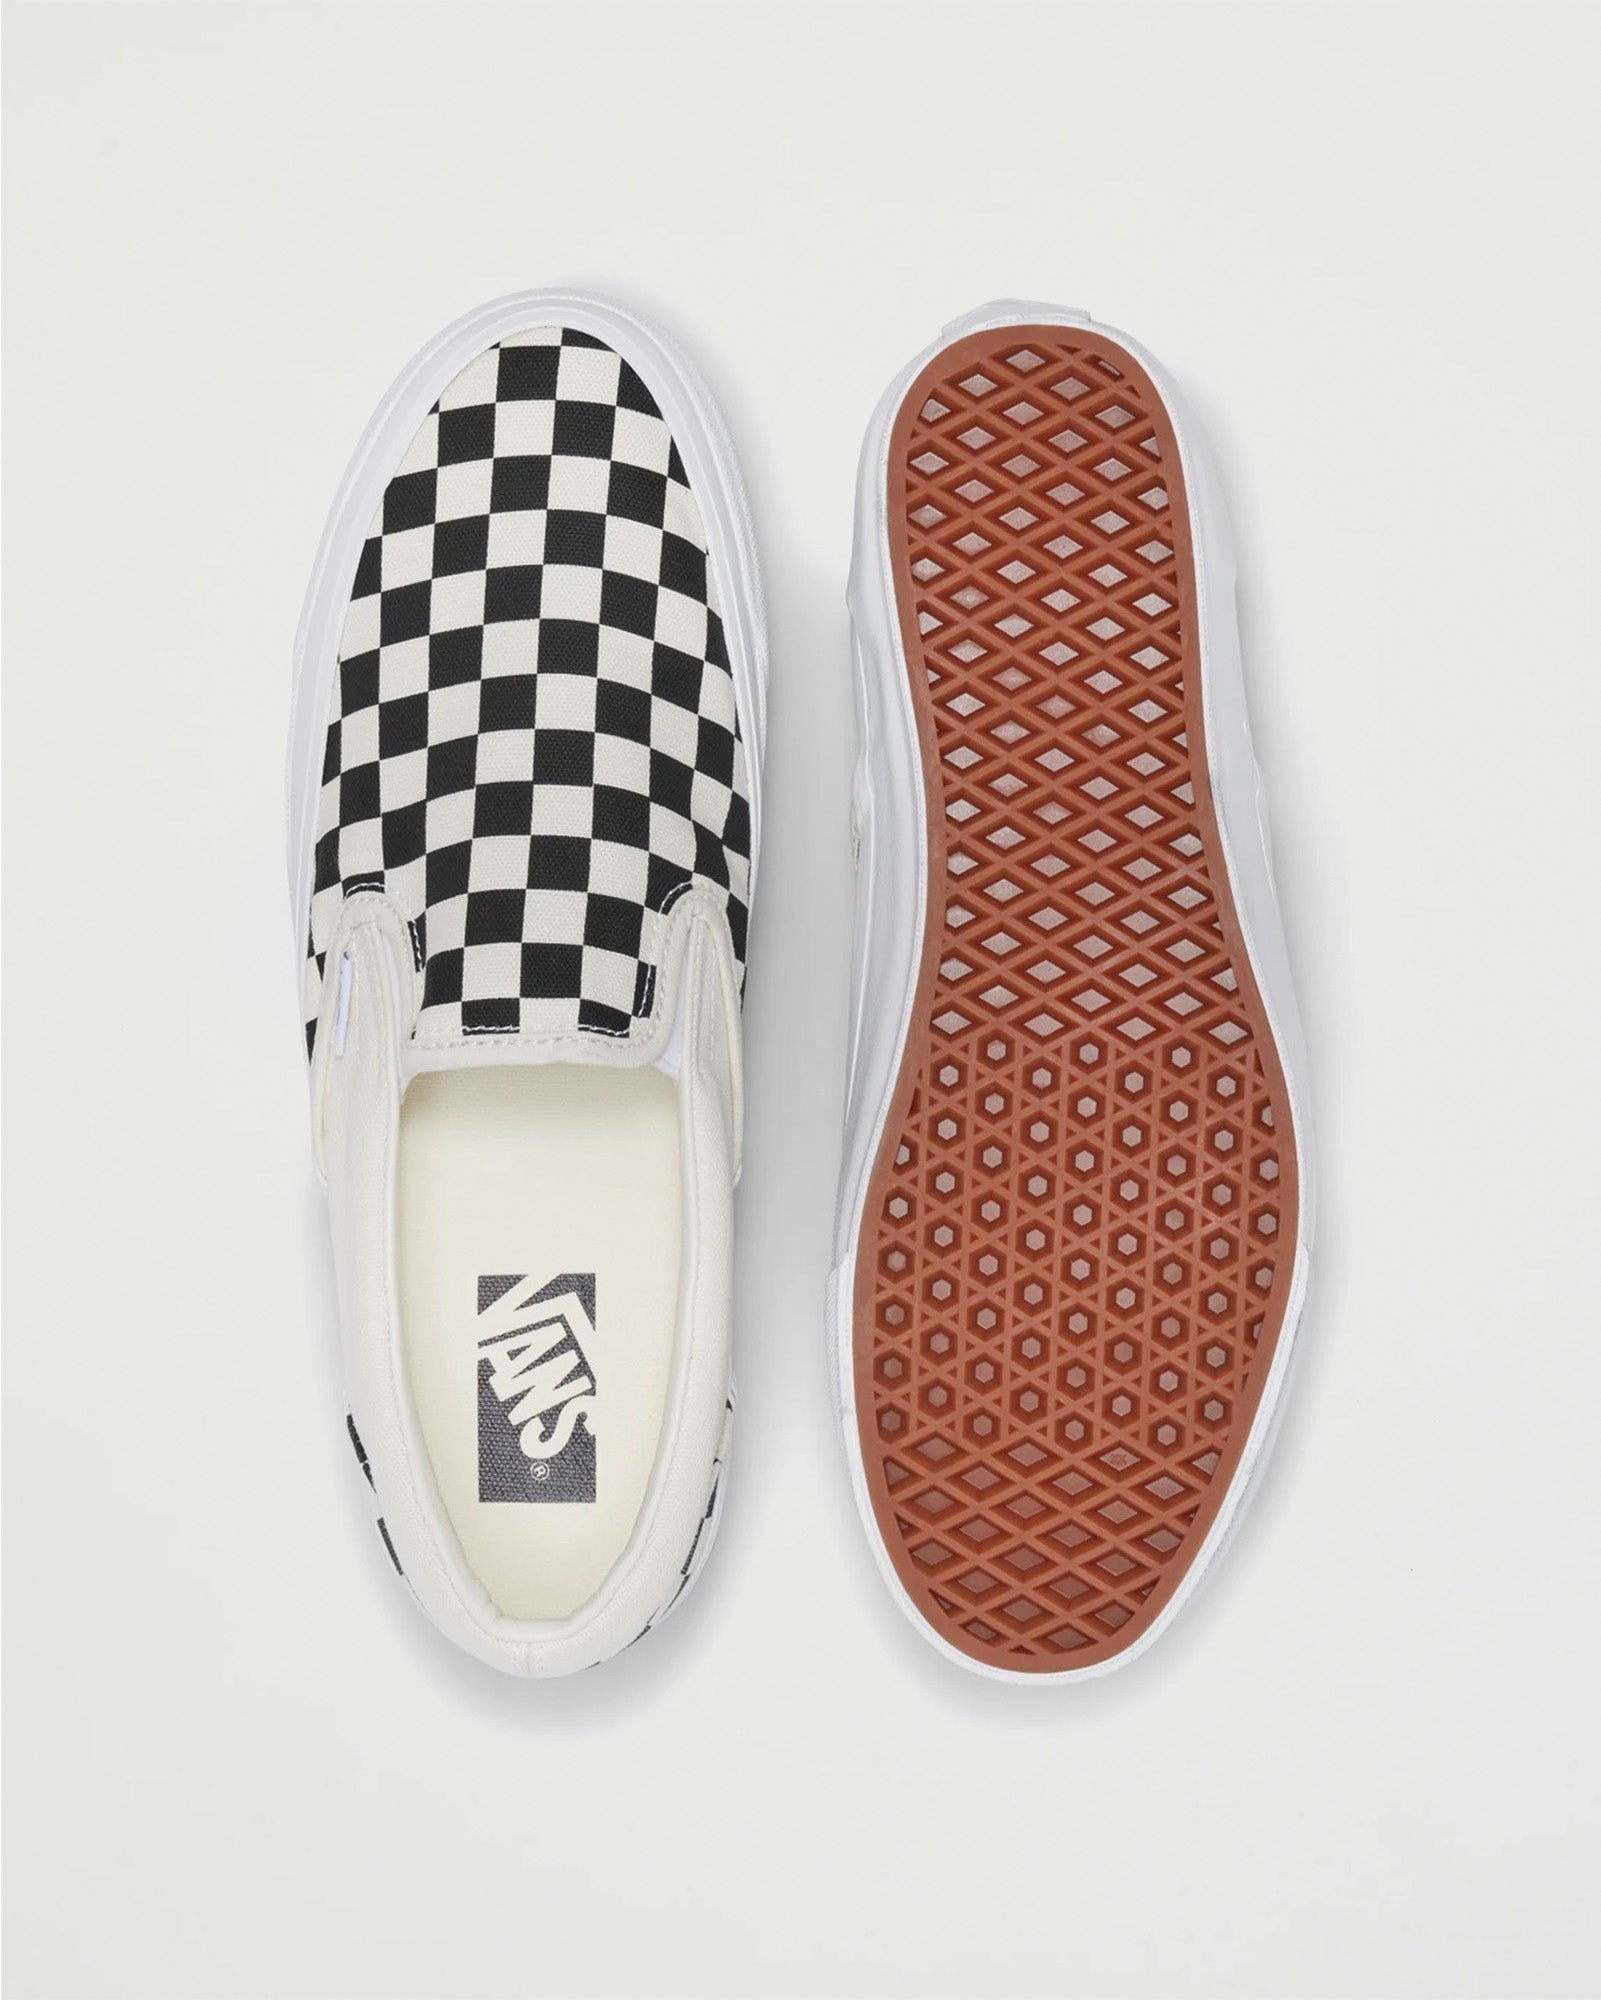 Vans Premium Slip-On Reissue 98 LX Checkerboard Black/Off White Shoes Sneakers Unisex